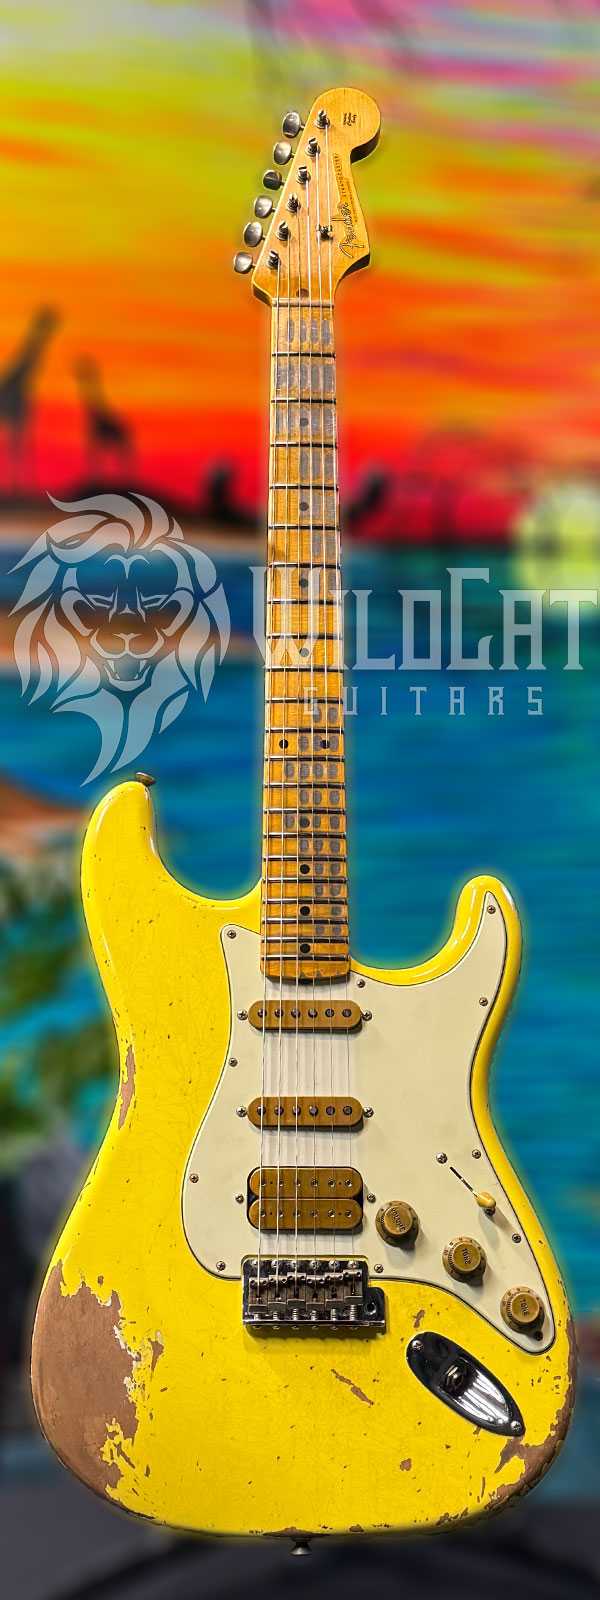 WildCat Exclusive Fender Custom Shop Alley Cat Strat “Vintage” Graffiti Yellow R130871